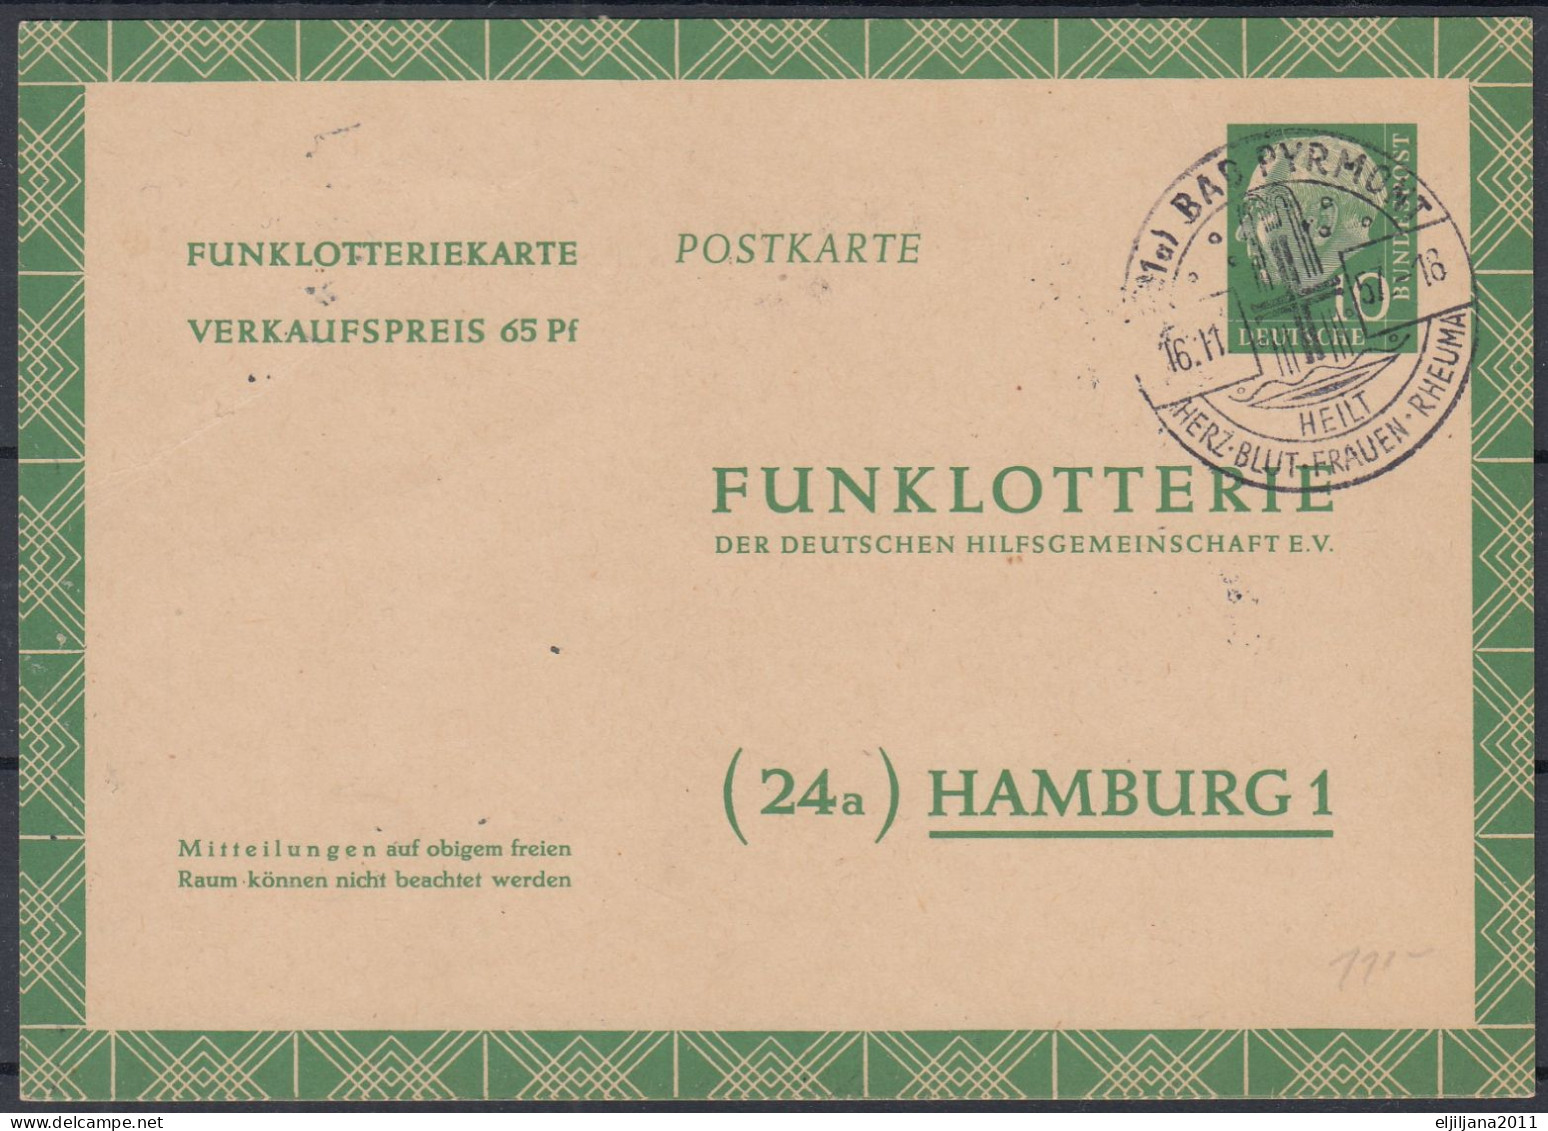 ⁕ Germany 1957 Deutsche BundesPost ⁕ FUNKLOTTERIE (24a) Hamburg 1 ⁕ Bad Pyrmont Postmark ⁕ Stationery Postcard - Postcards - Used